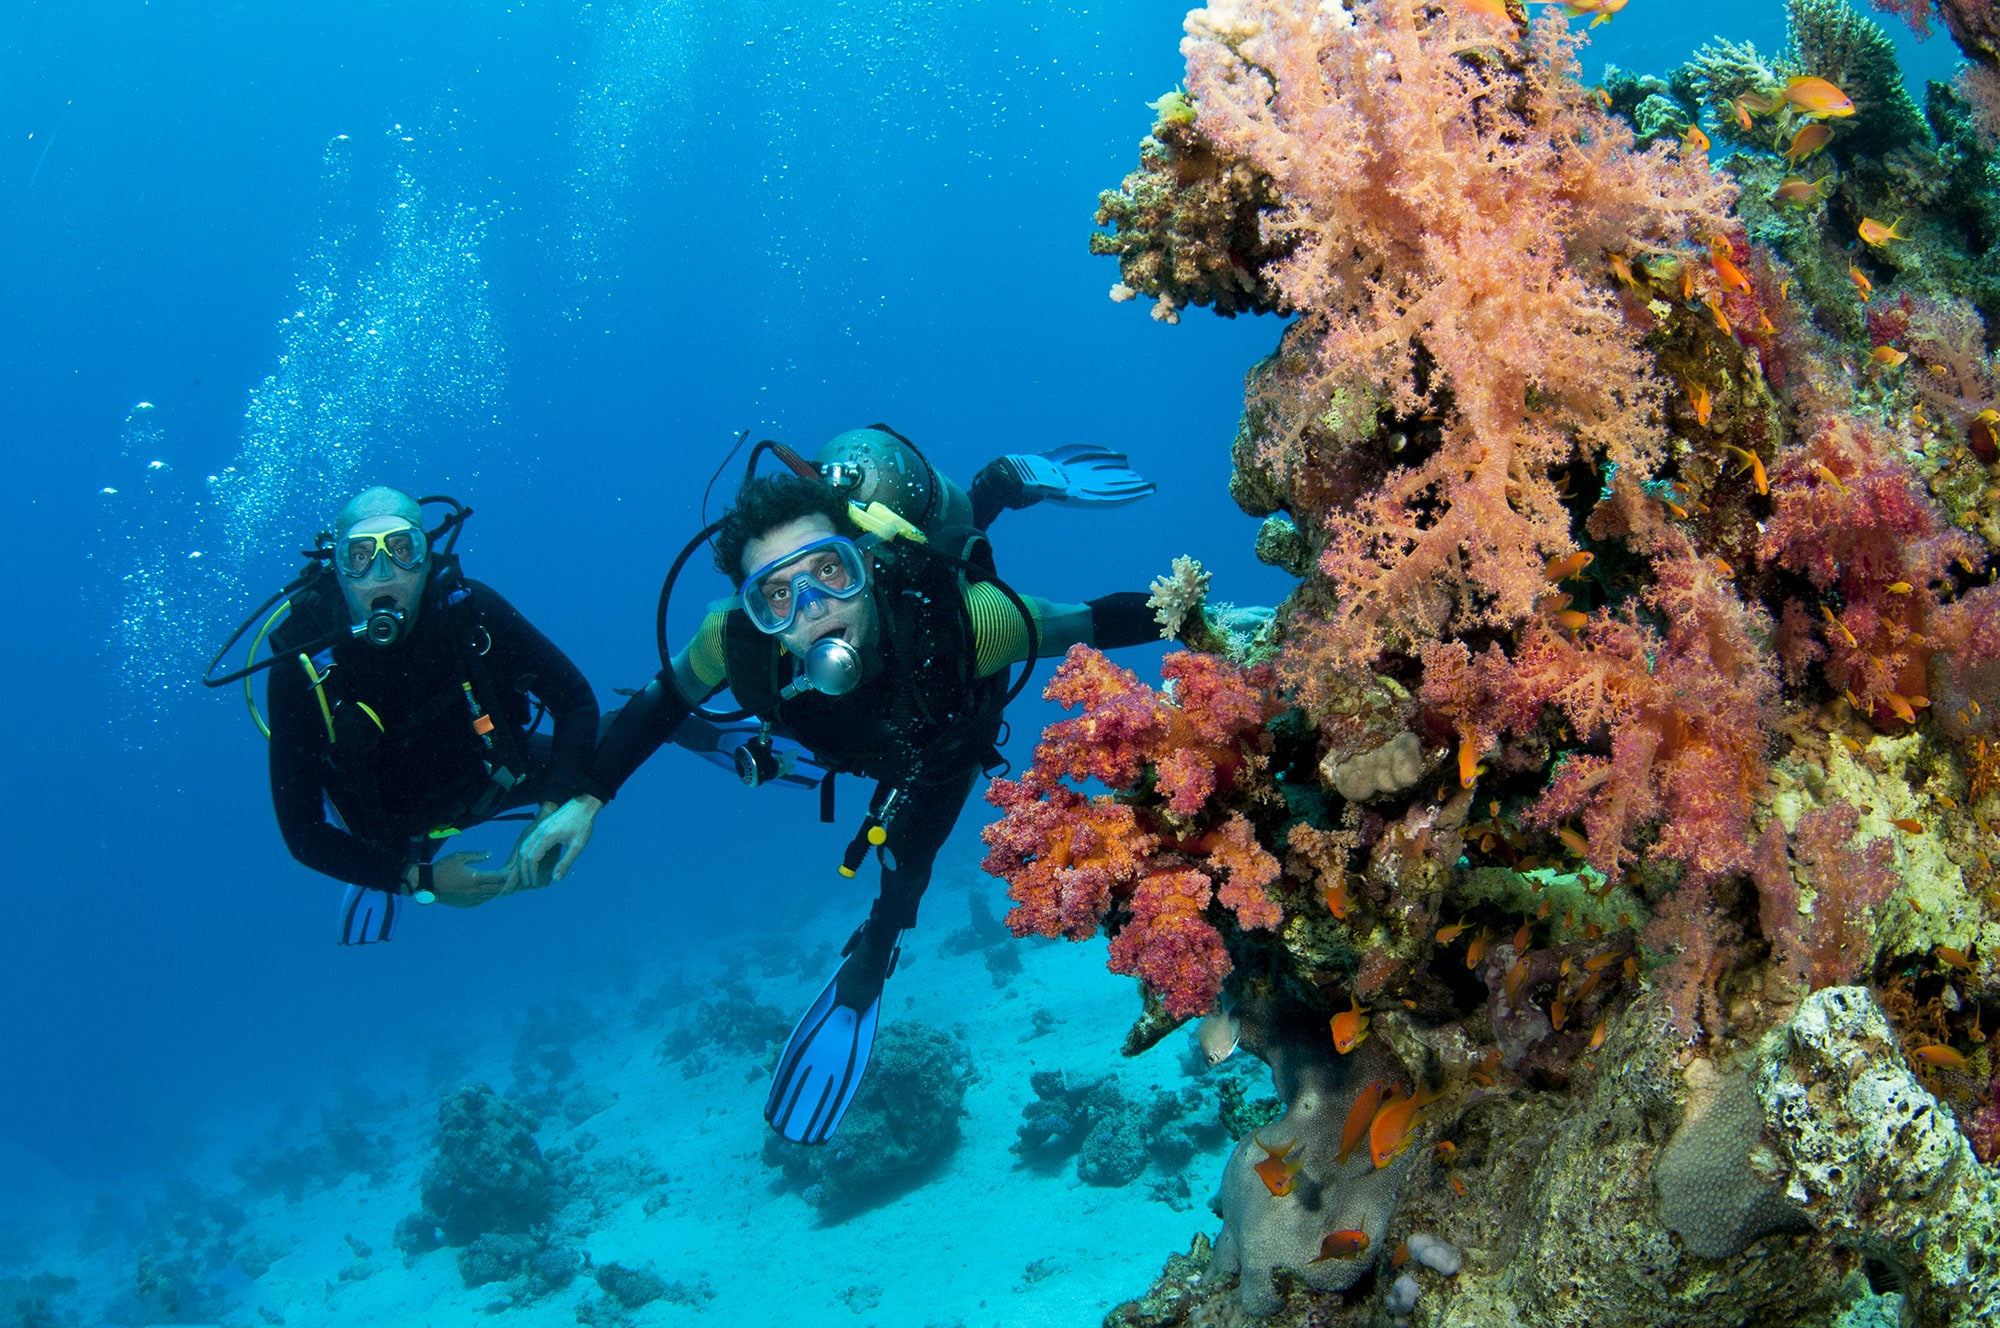 Diving Medicine for Scuba Divers